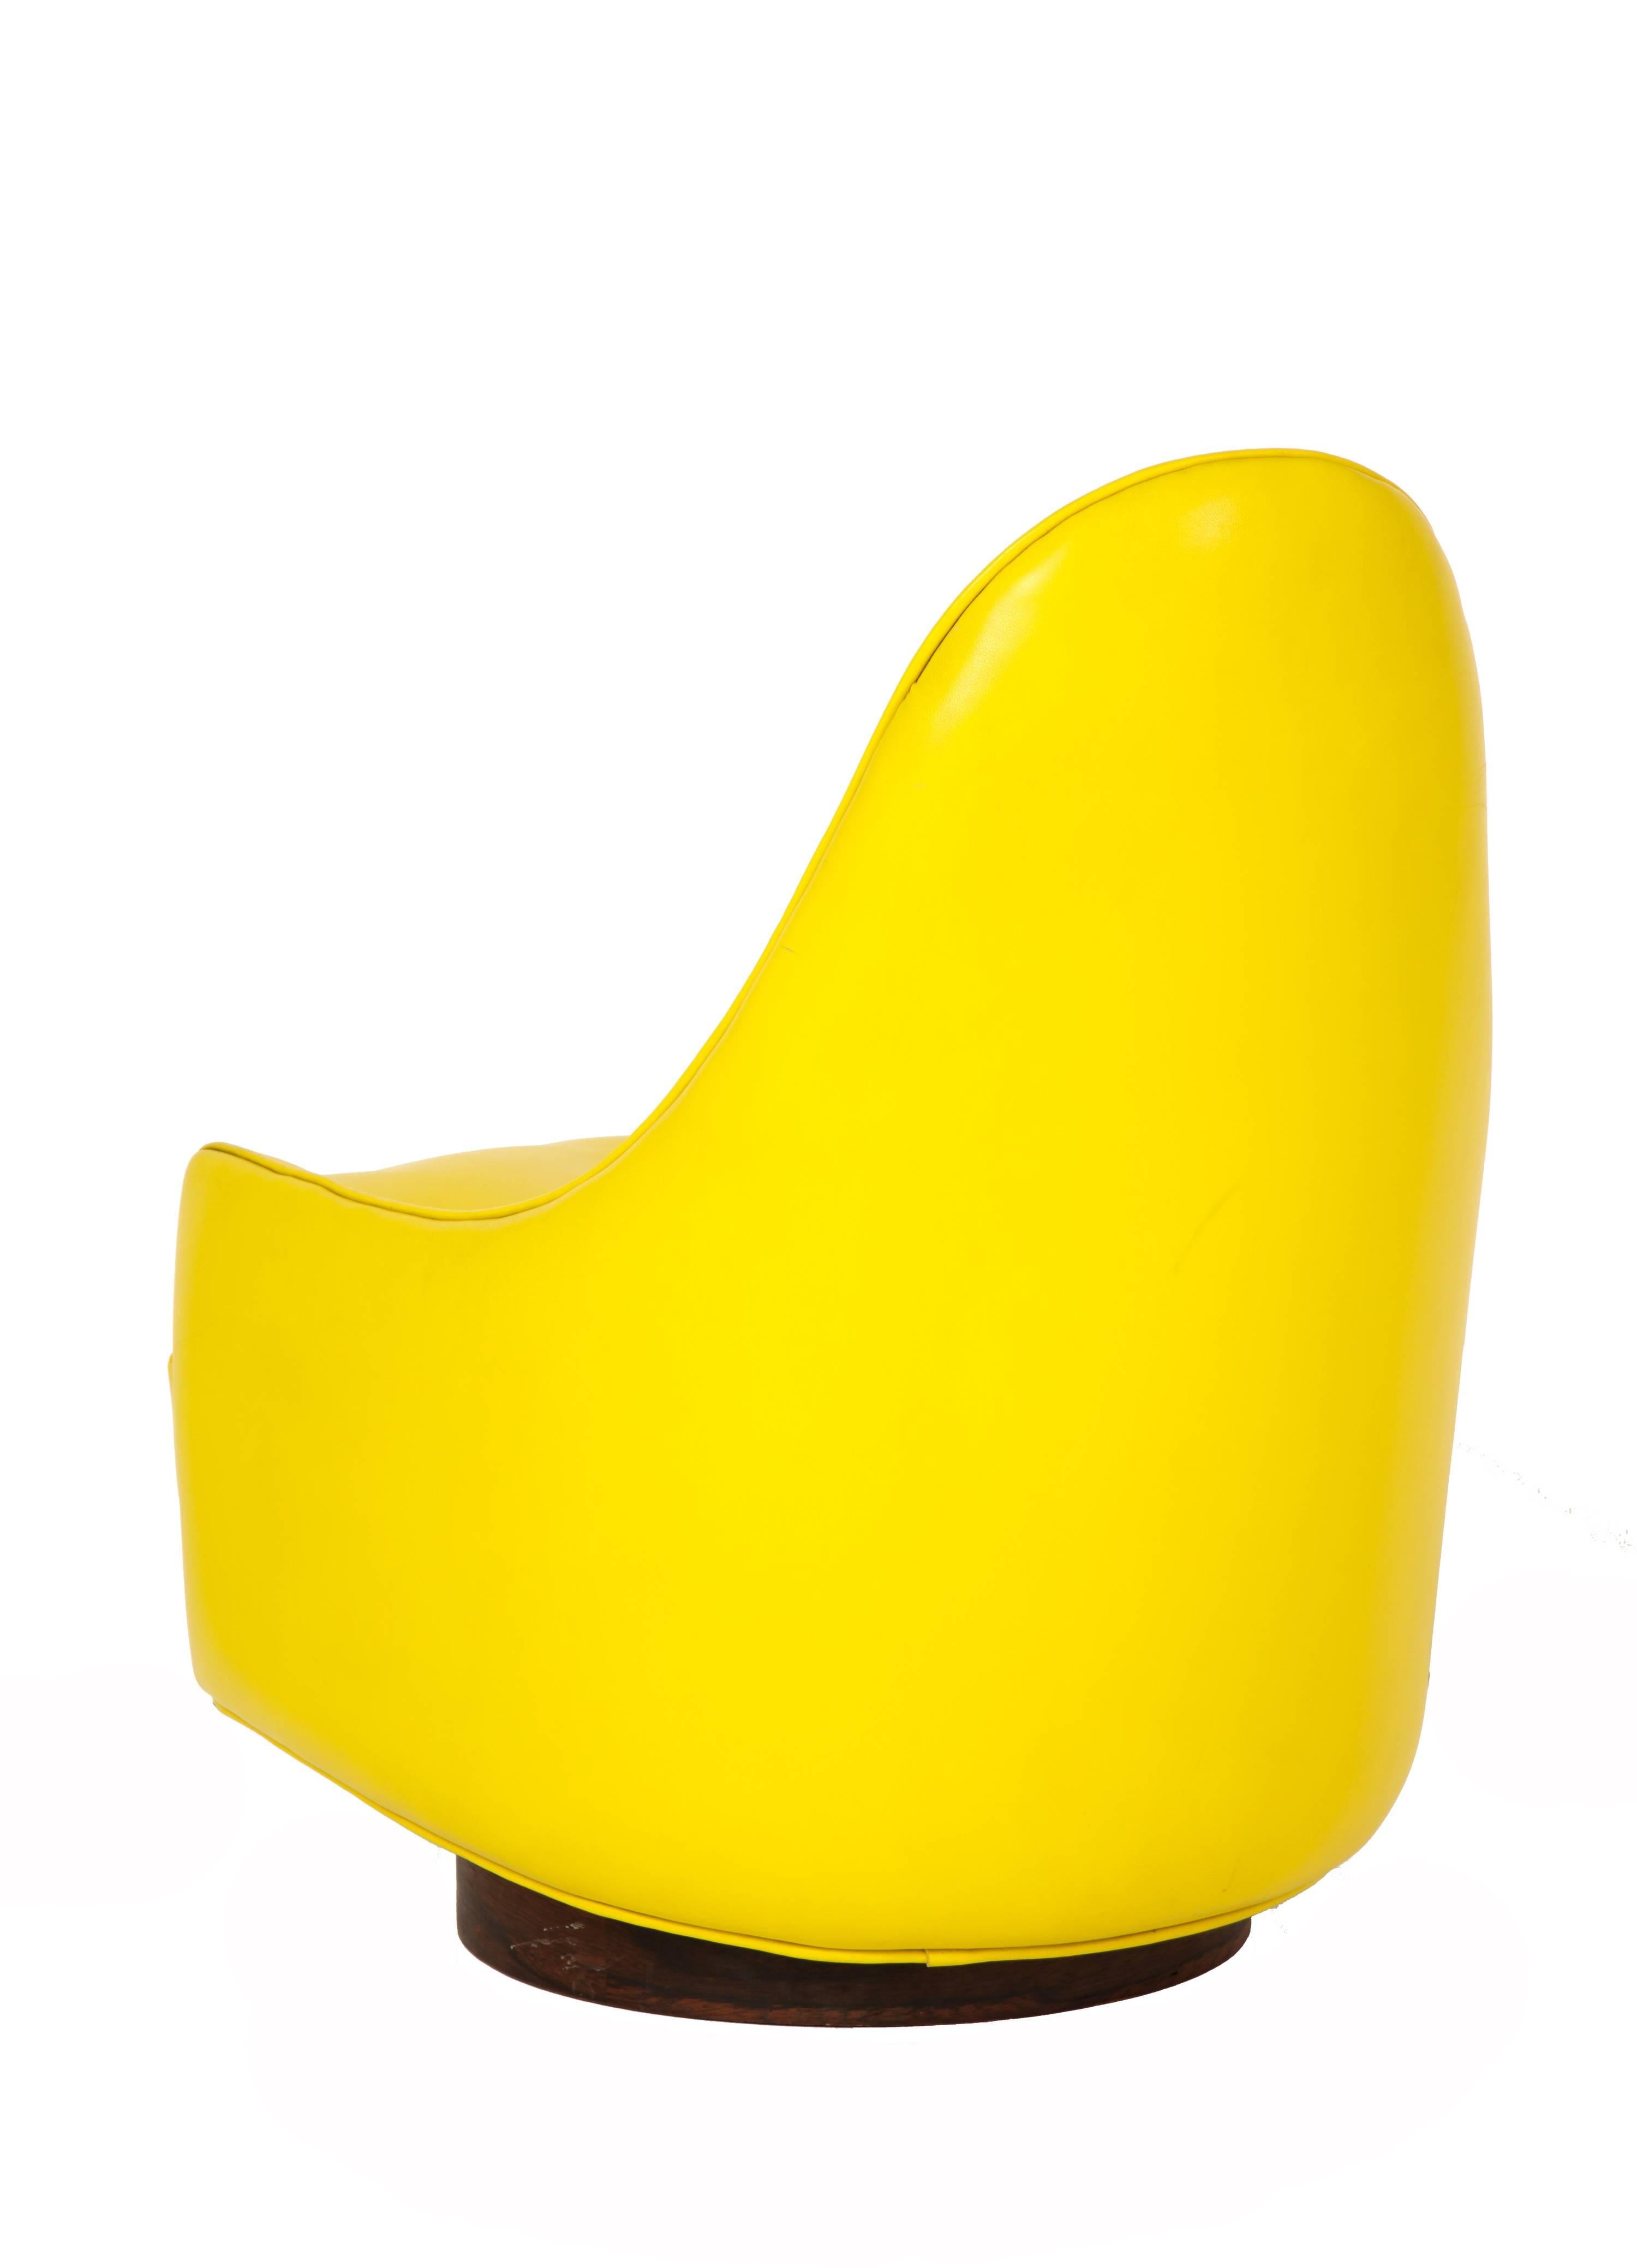 American Milo Baughman Swiveling Lounge Chair, Yellow, Rosewood, Signed